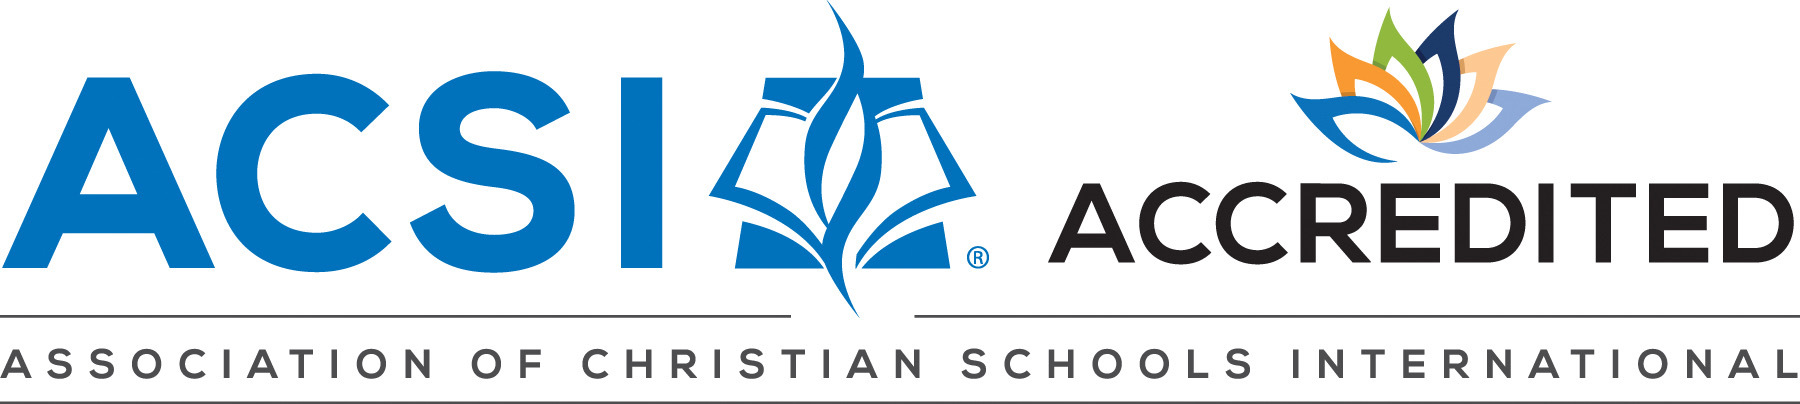 ACSI Accredited - Association of Christian Schools International